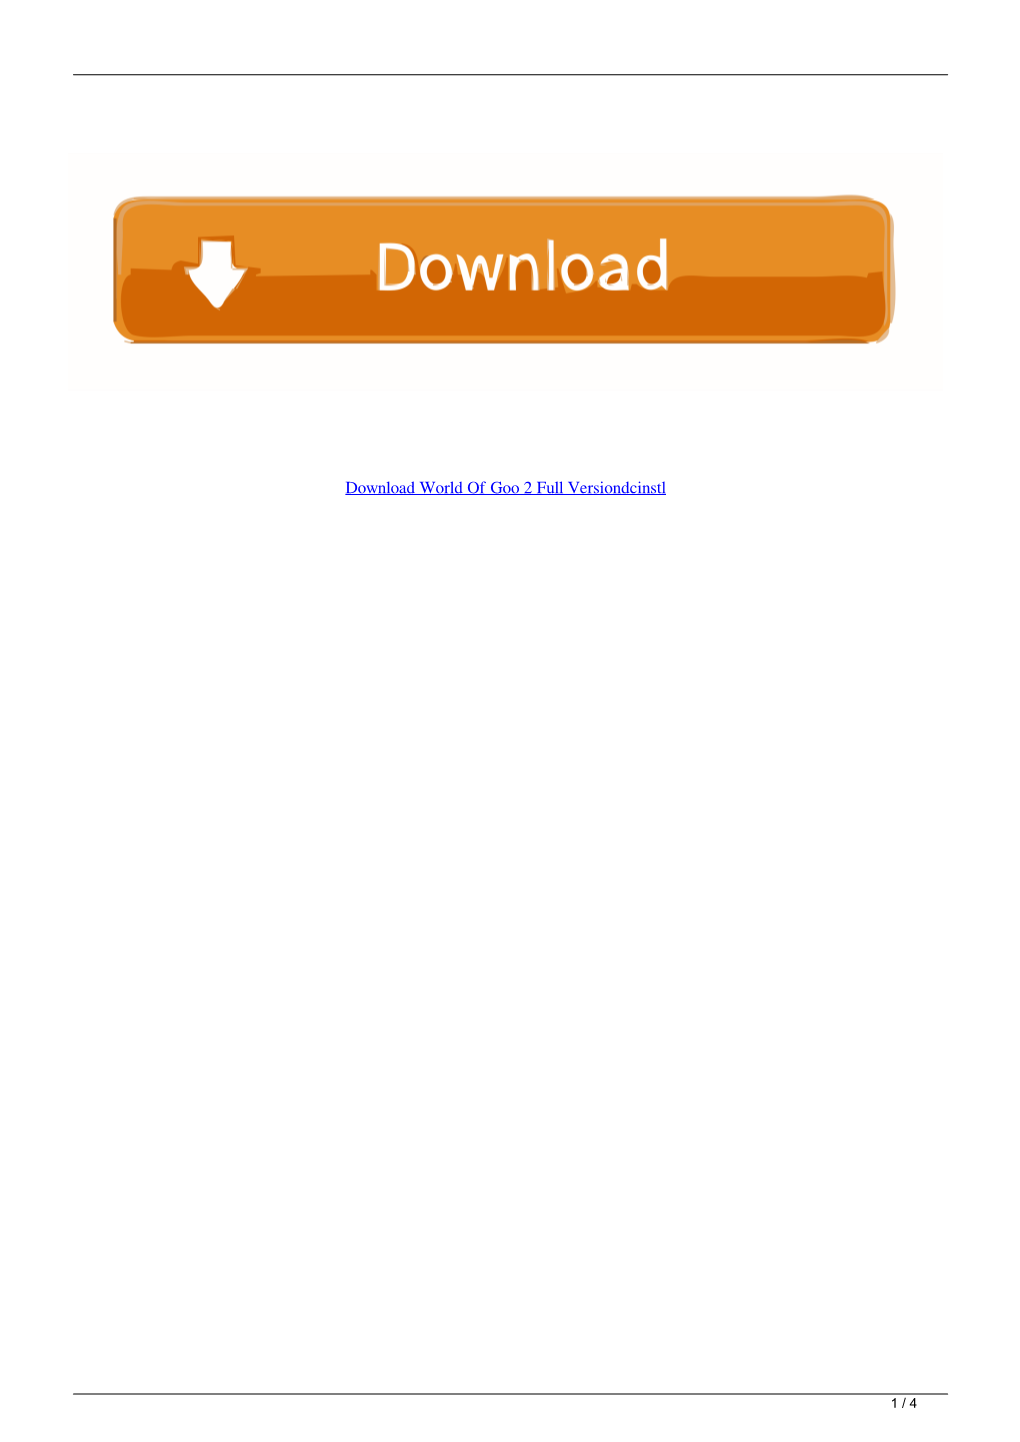 Download World of Goo 2 Full Versiondcinstl